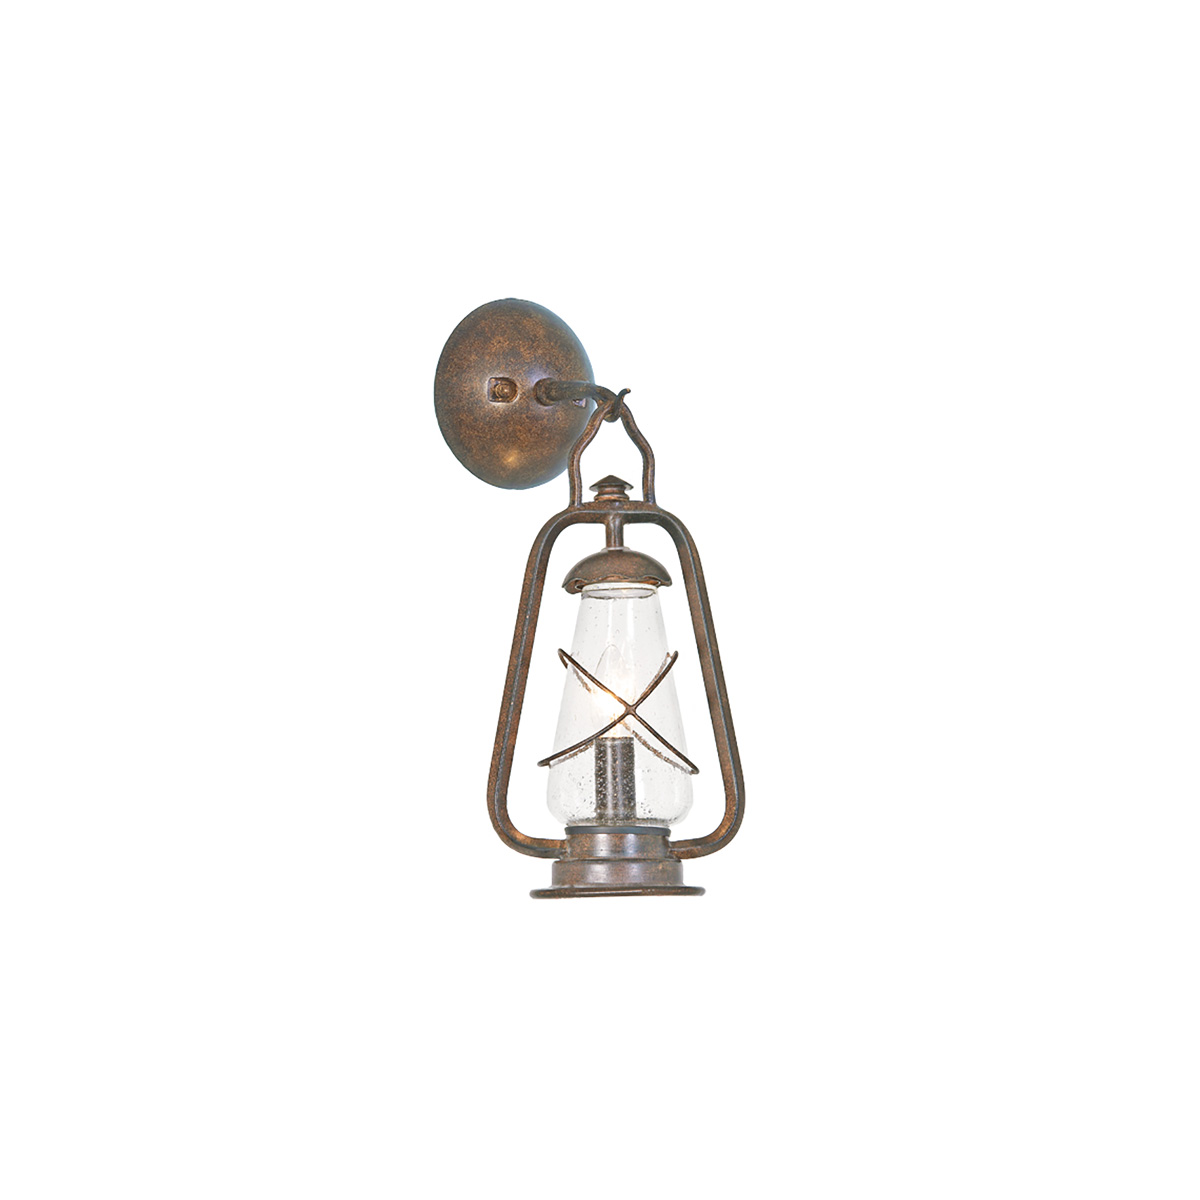 Настенный фонарь MINERS-WALL. Бренд: Elstead Lighting. Настенные фонари